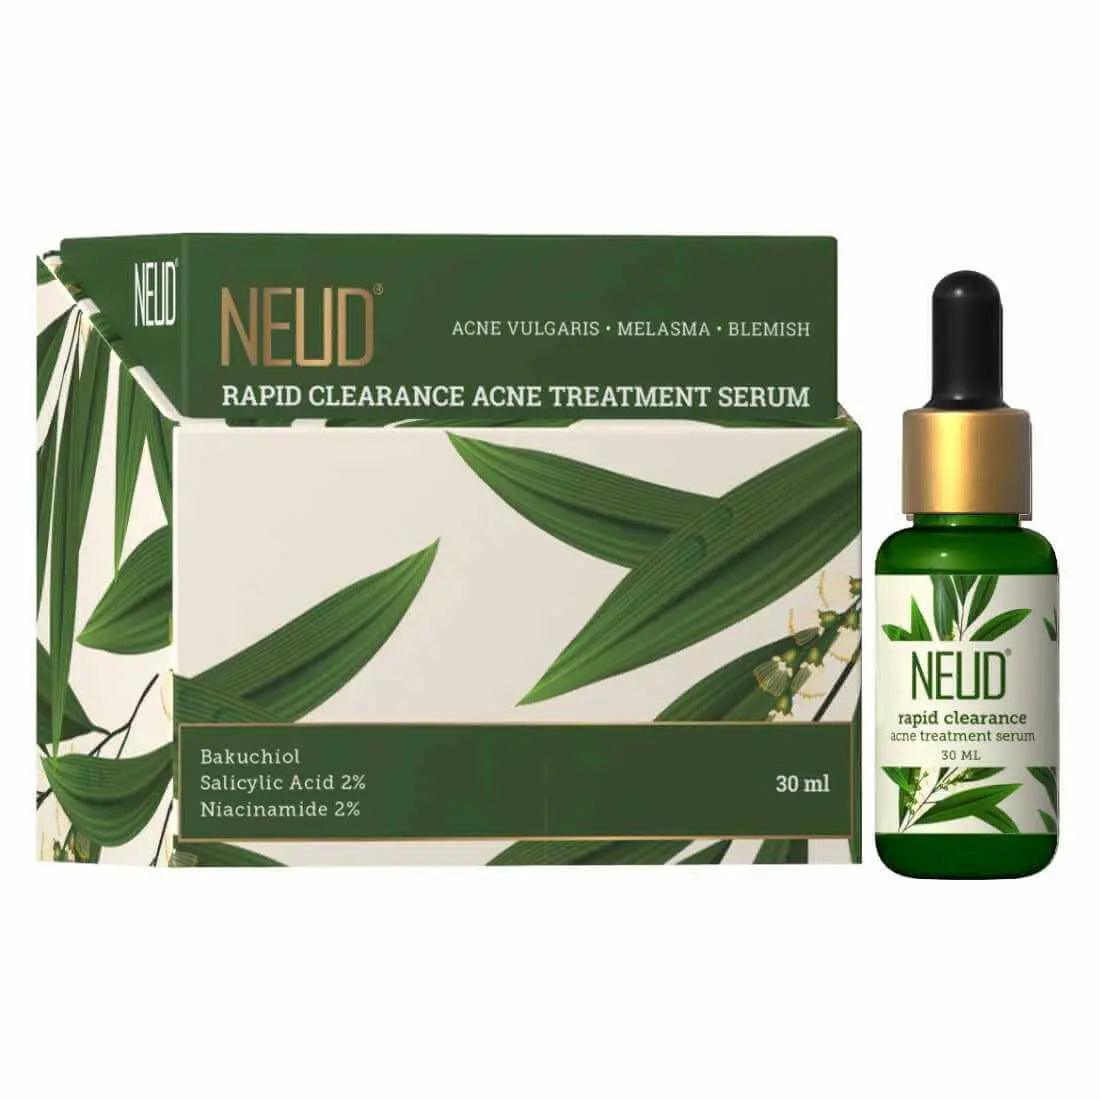 NEUD Rapid Clearance Acne Treatment Serum With Salicylic Acid, Bakuchiol and Niacinamide - 30 ml 8906116280607